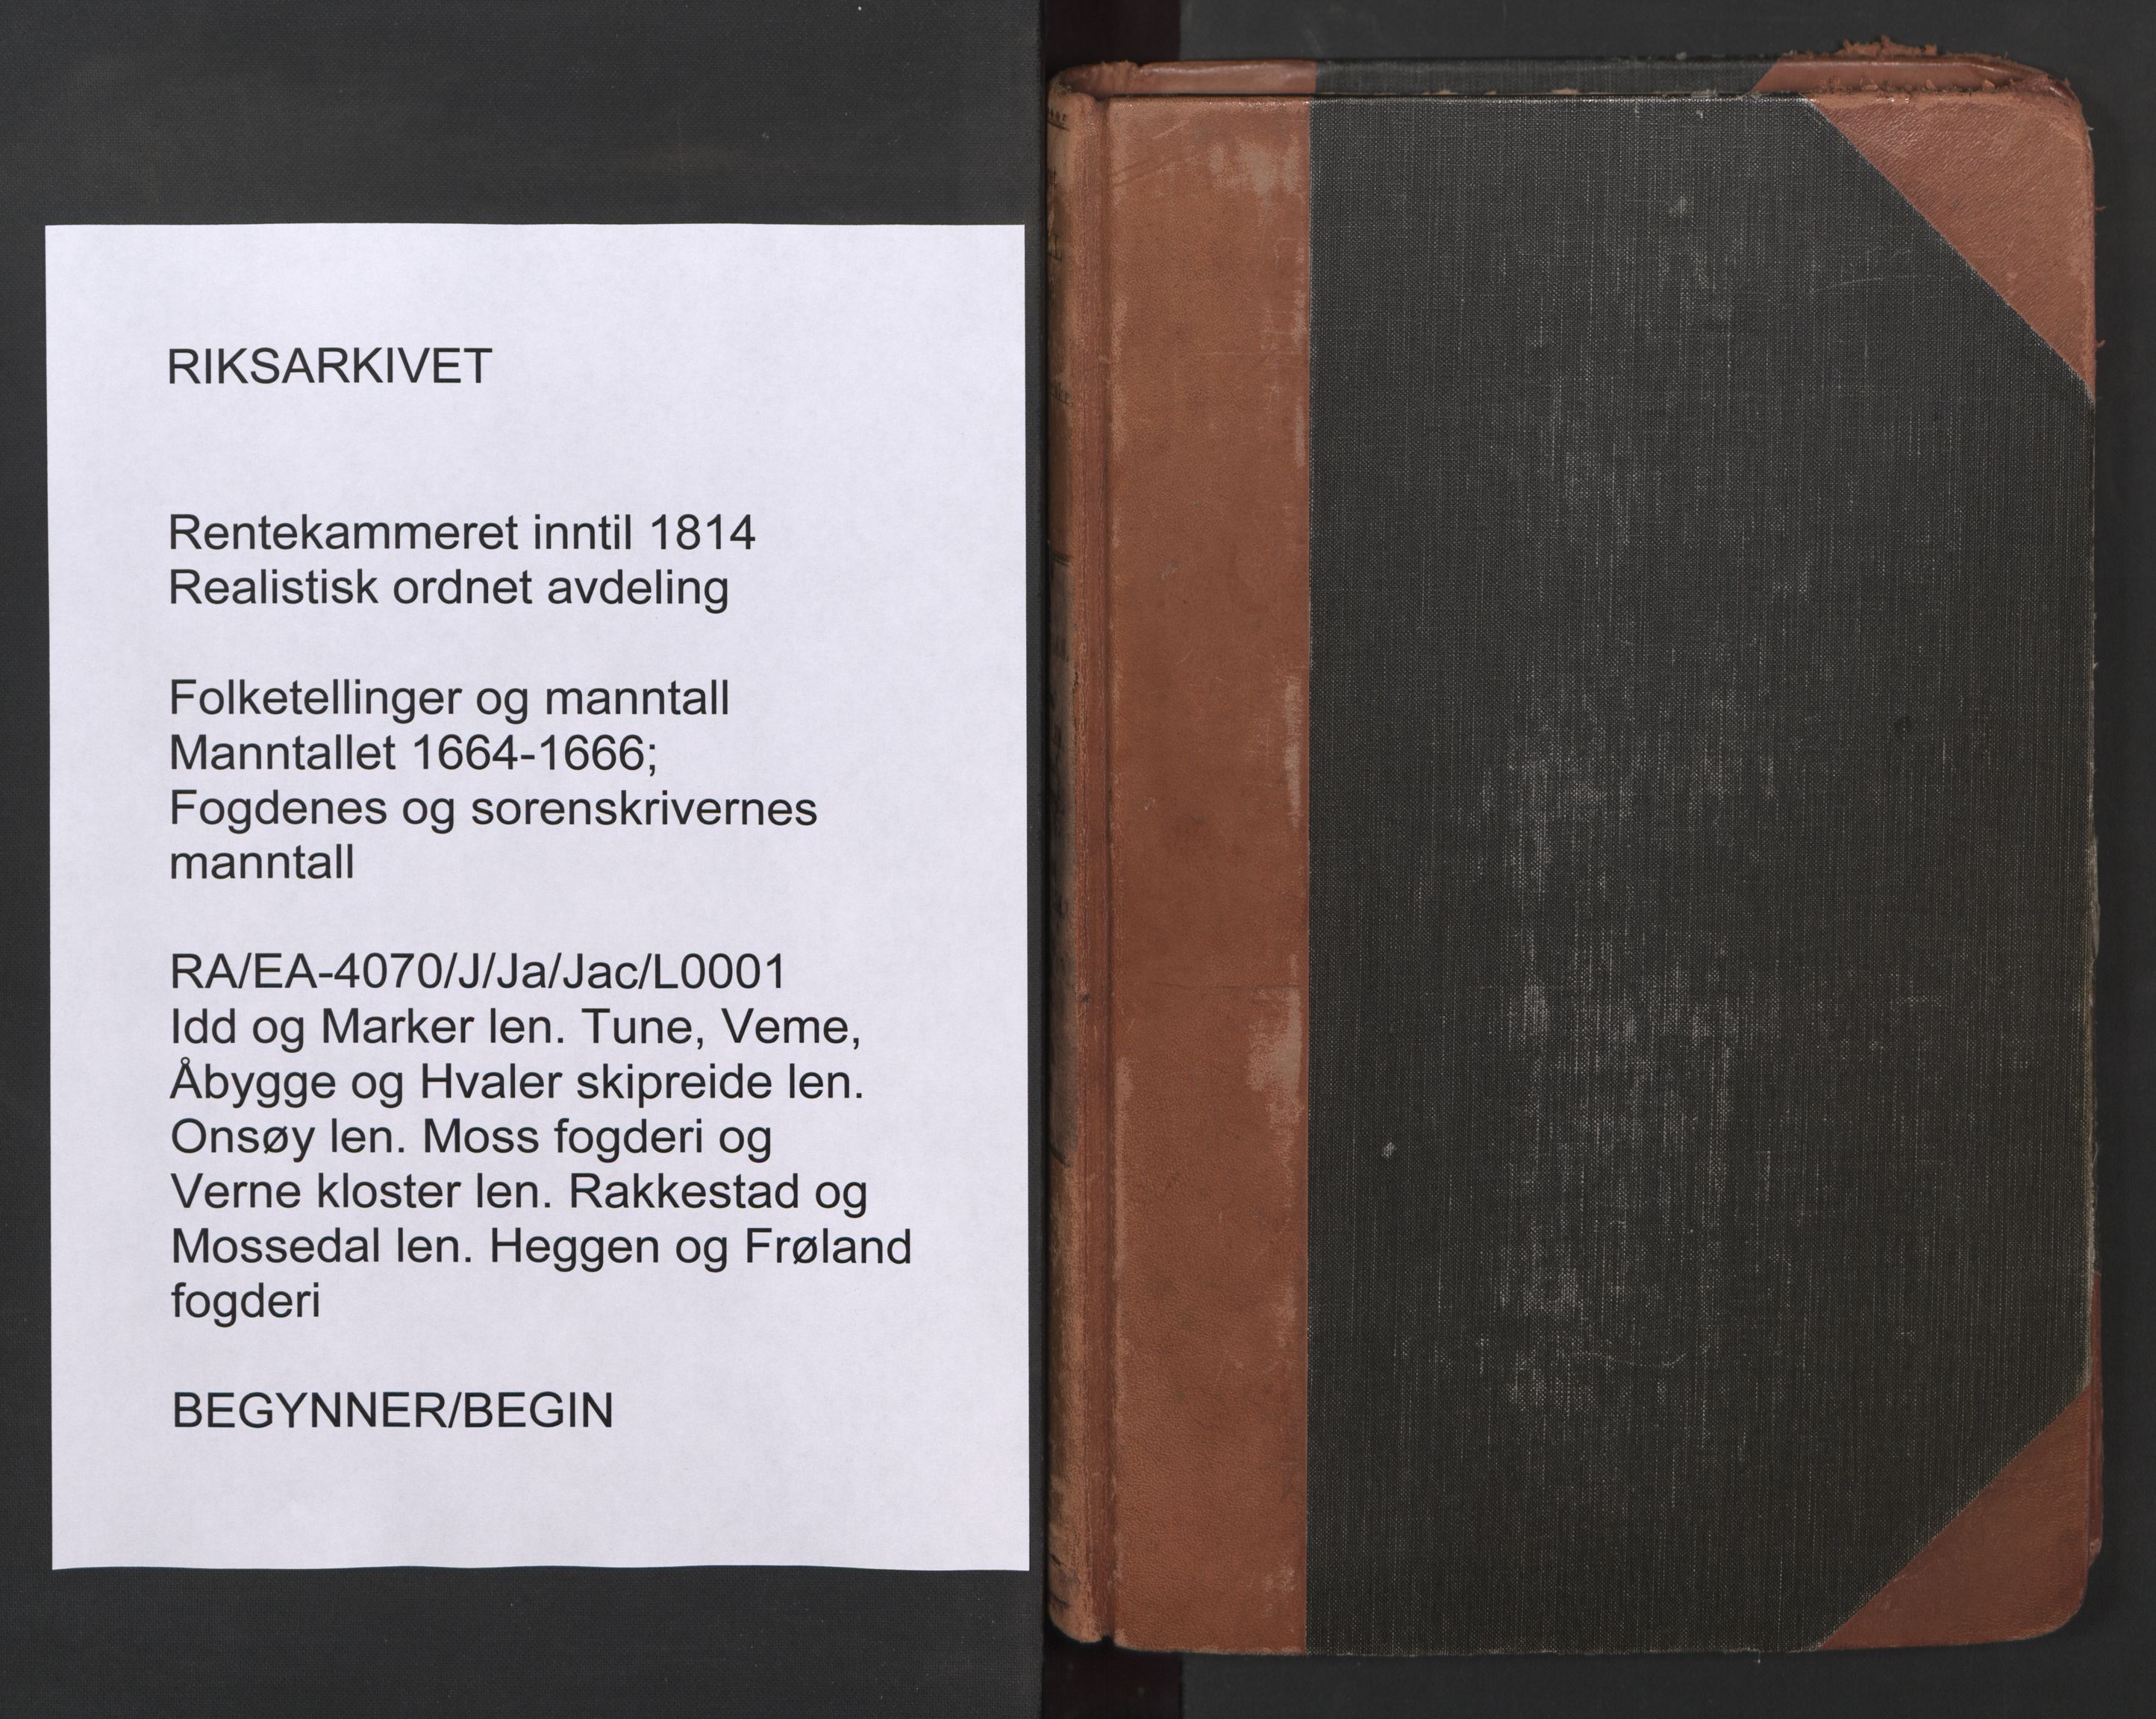 RA, Fogdenes og sorenskrivernes manntall 1664-1666, nr. 1: Fogderier (len og skipreider) i nåværende Østfold fylke, 1664